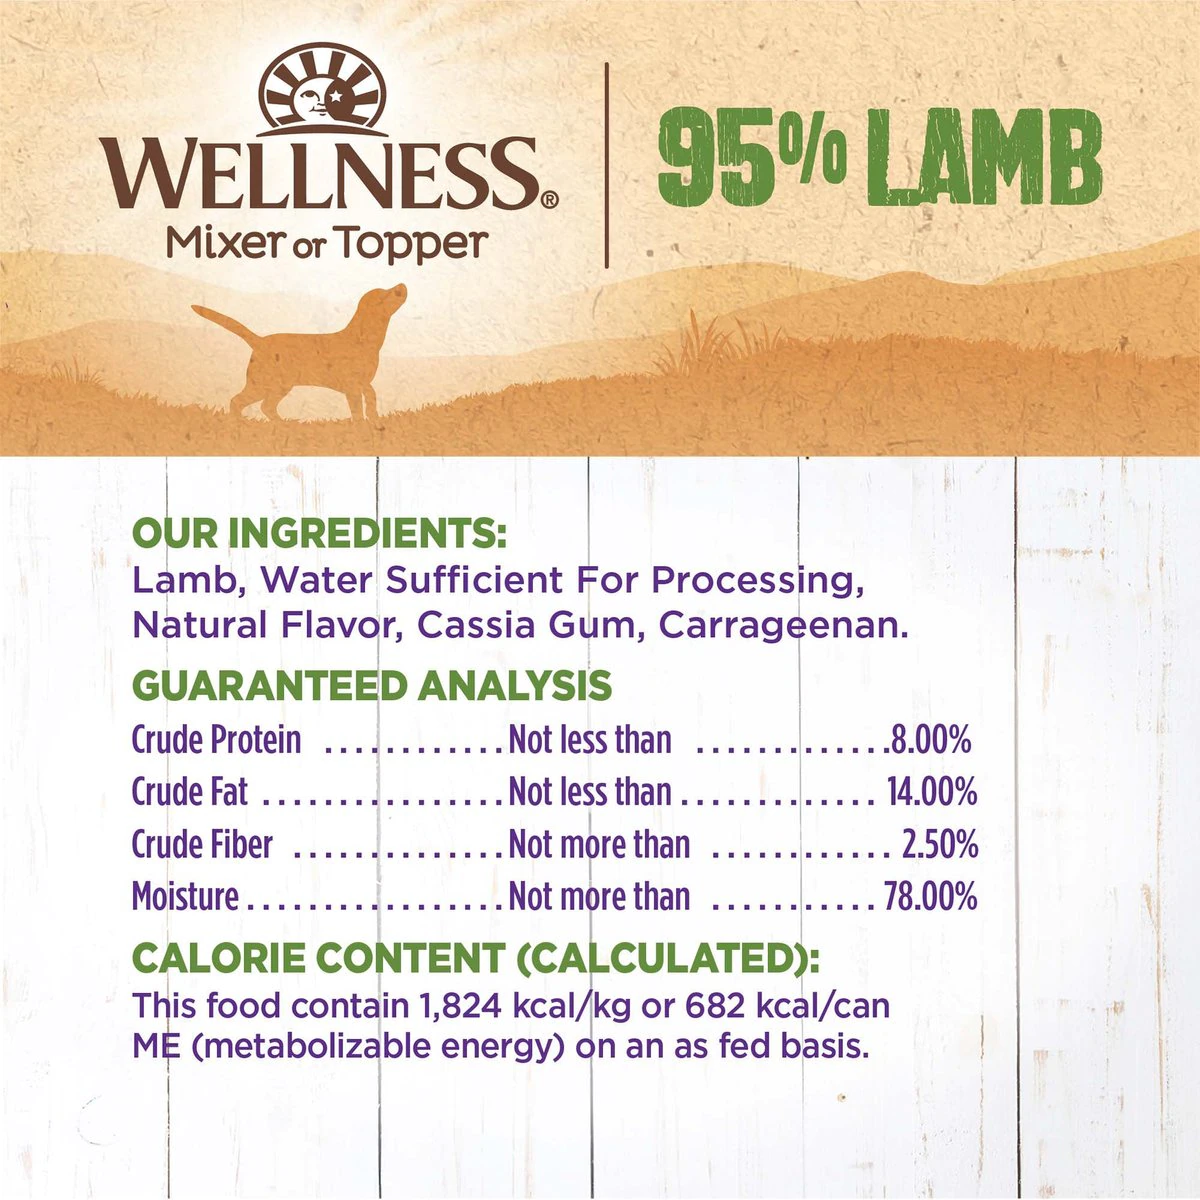 Wellness Canned Dog Food 95% Lamb  Canned Dog Food  | PetMax Canada